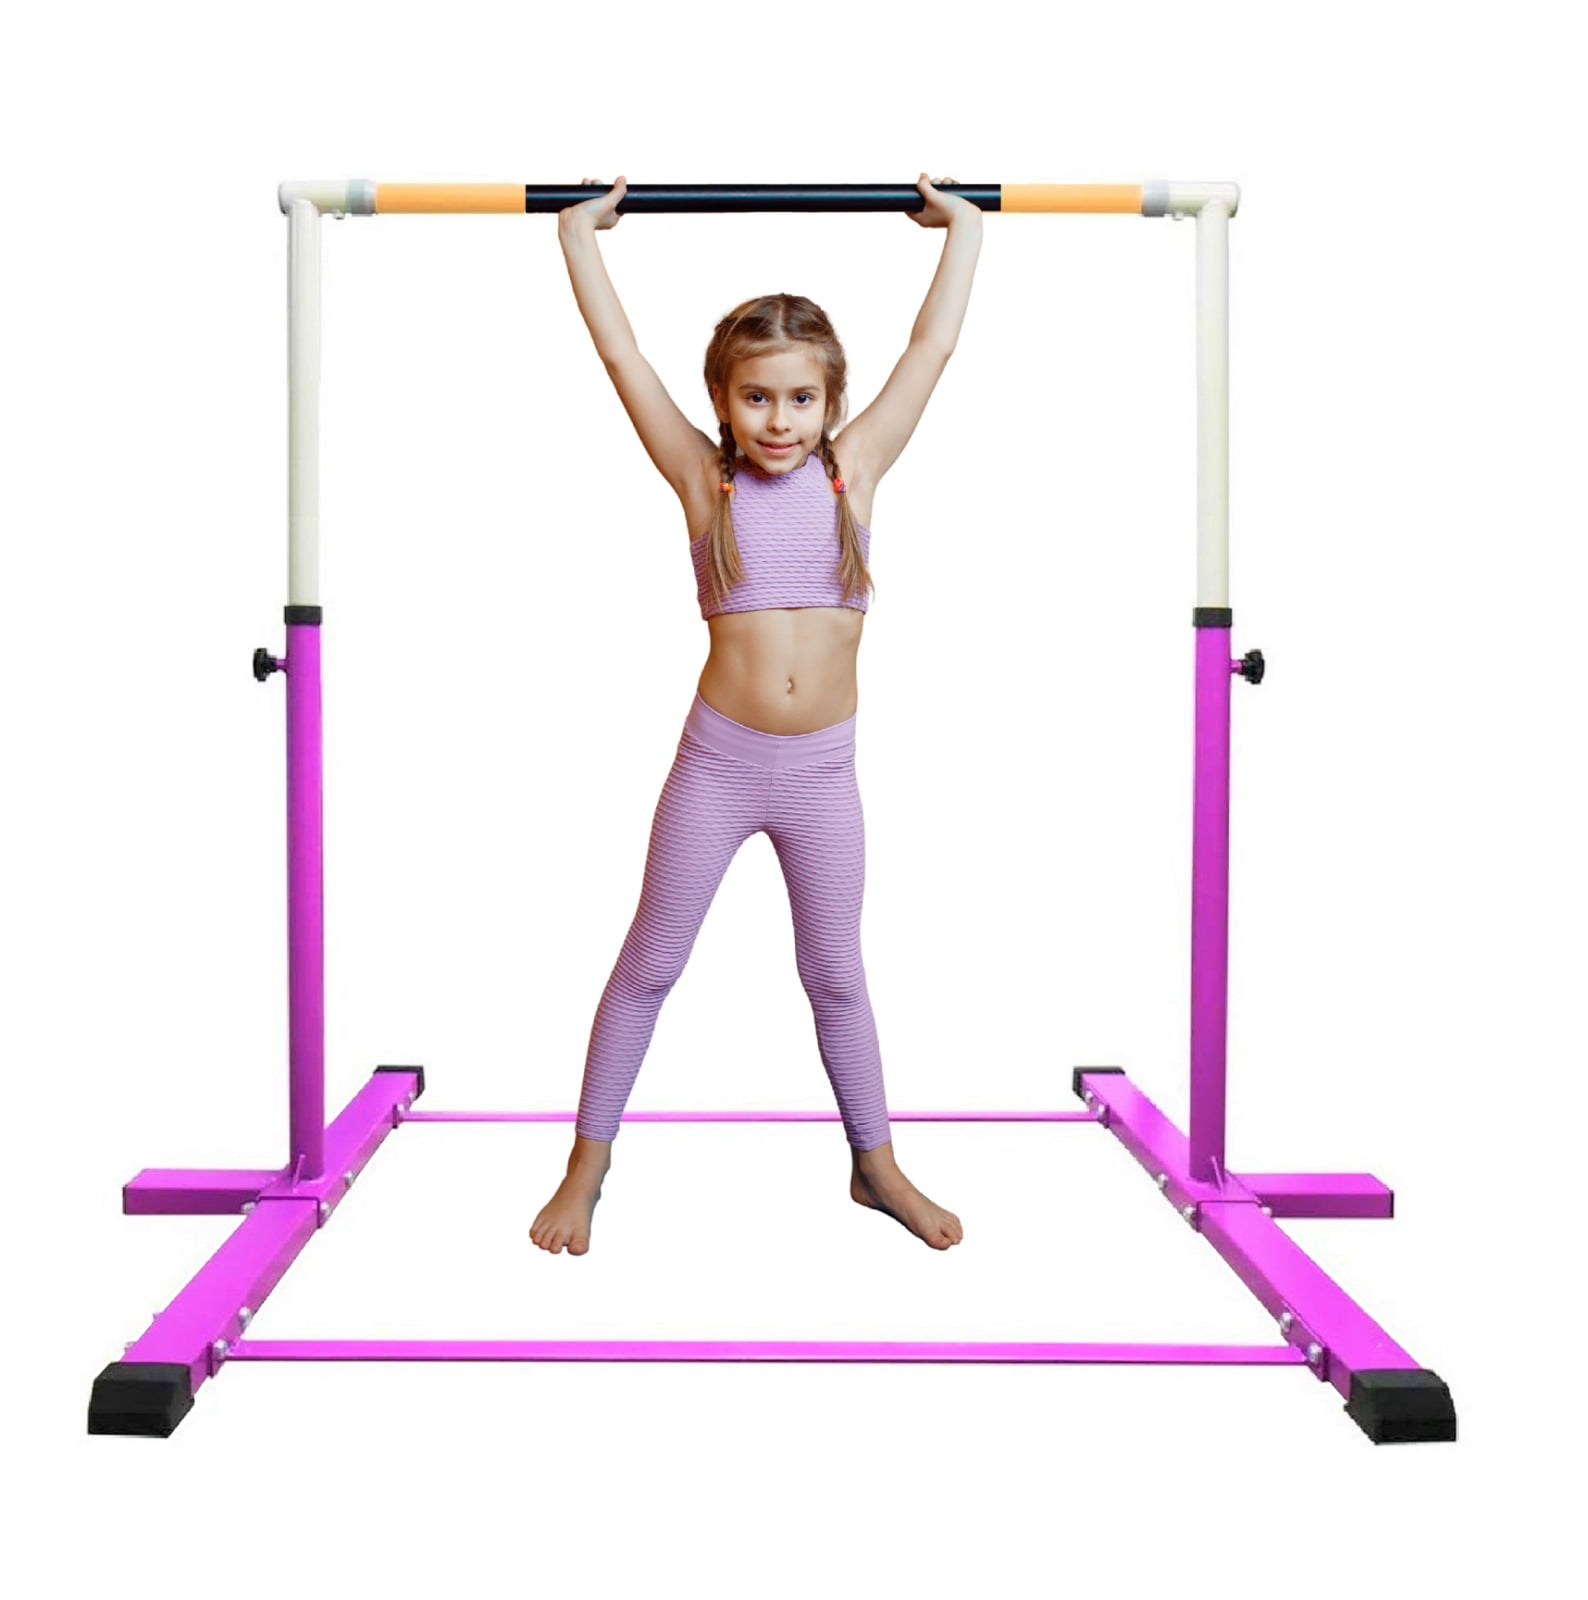 Gymnastics Equipment for Home Solid ... Springee 8ft Adjustable Balance Beam 